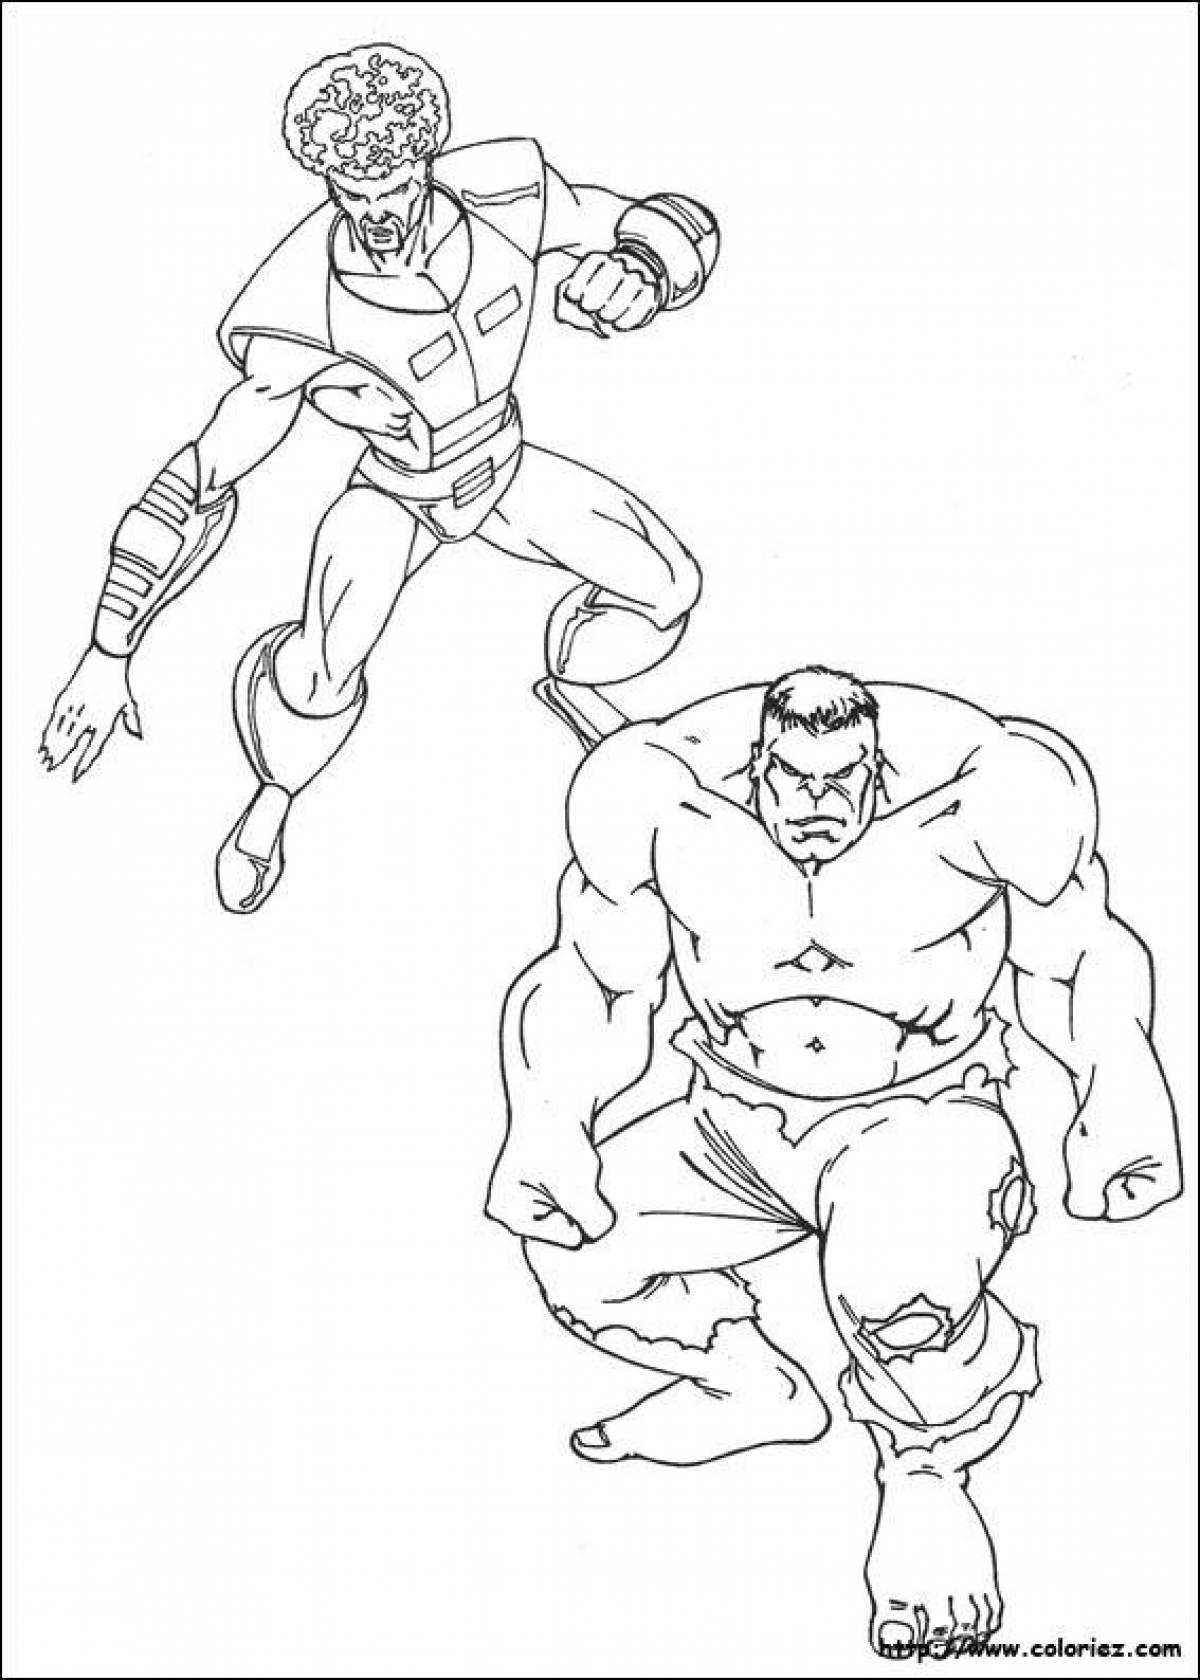 Wonderful Hulk and Spiderman coloring book